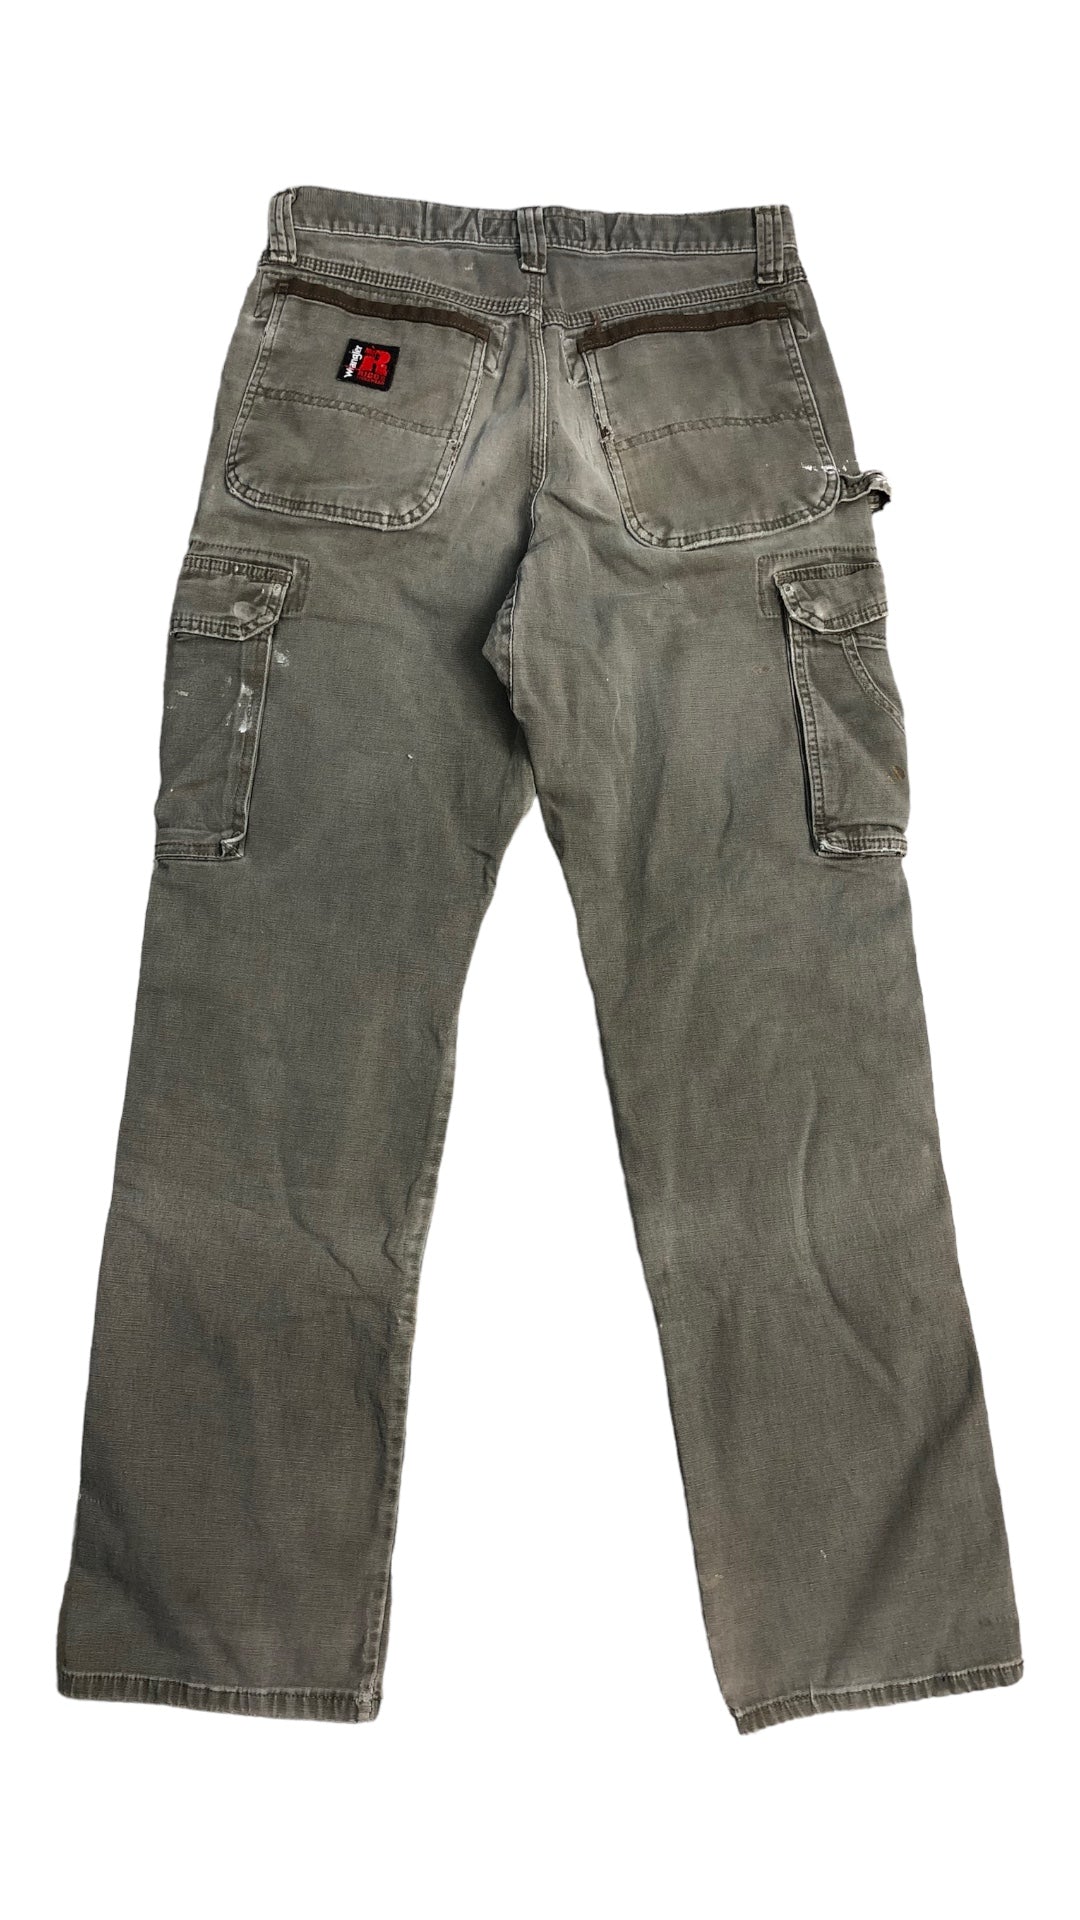 VTG Wrangler Riggs Jeans Sz 30x32